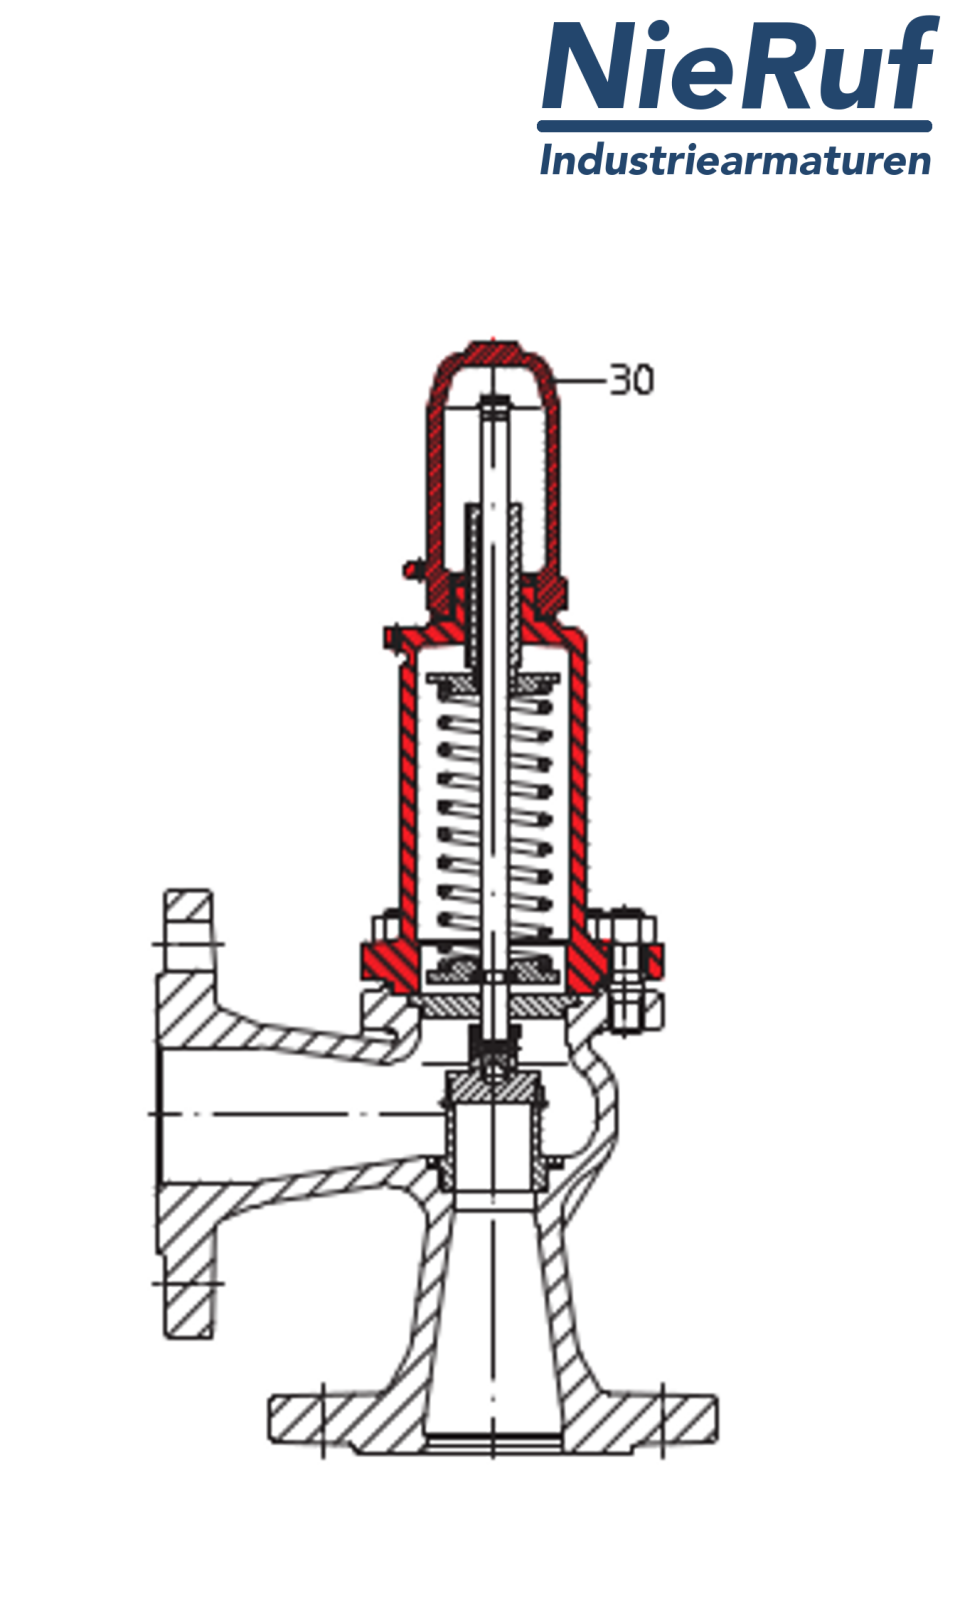 flange-safety valve DN80/DN80 SF0101, cast iron EN-JL1040 FPM, without lever